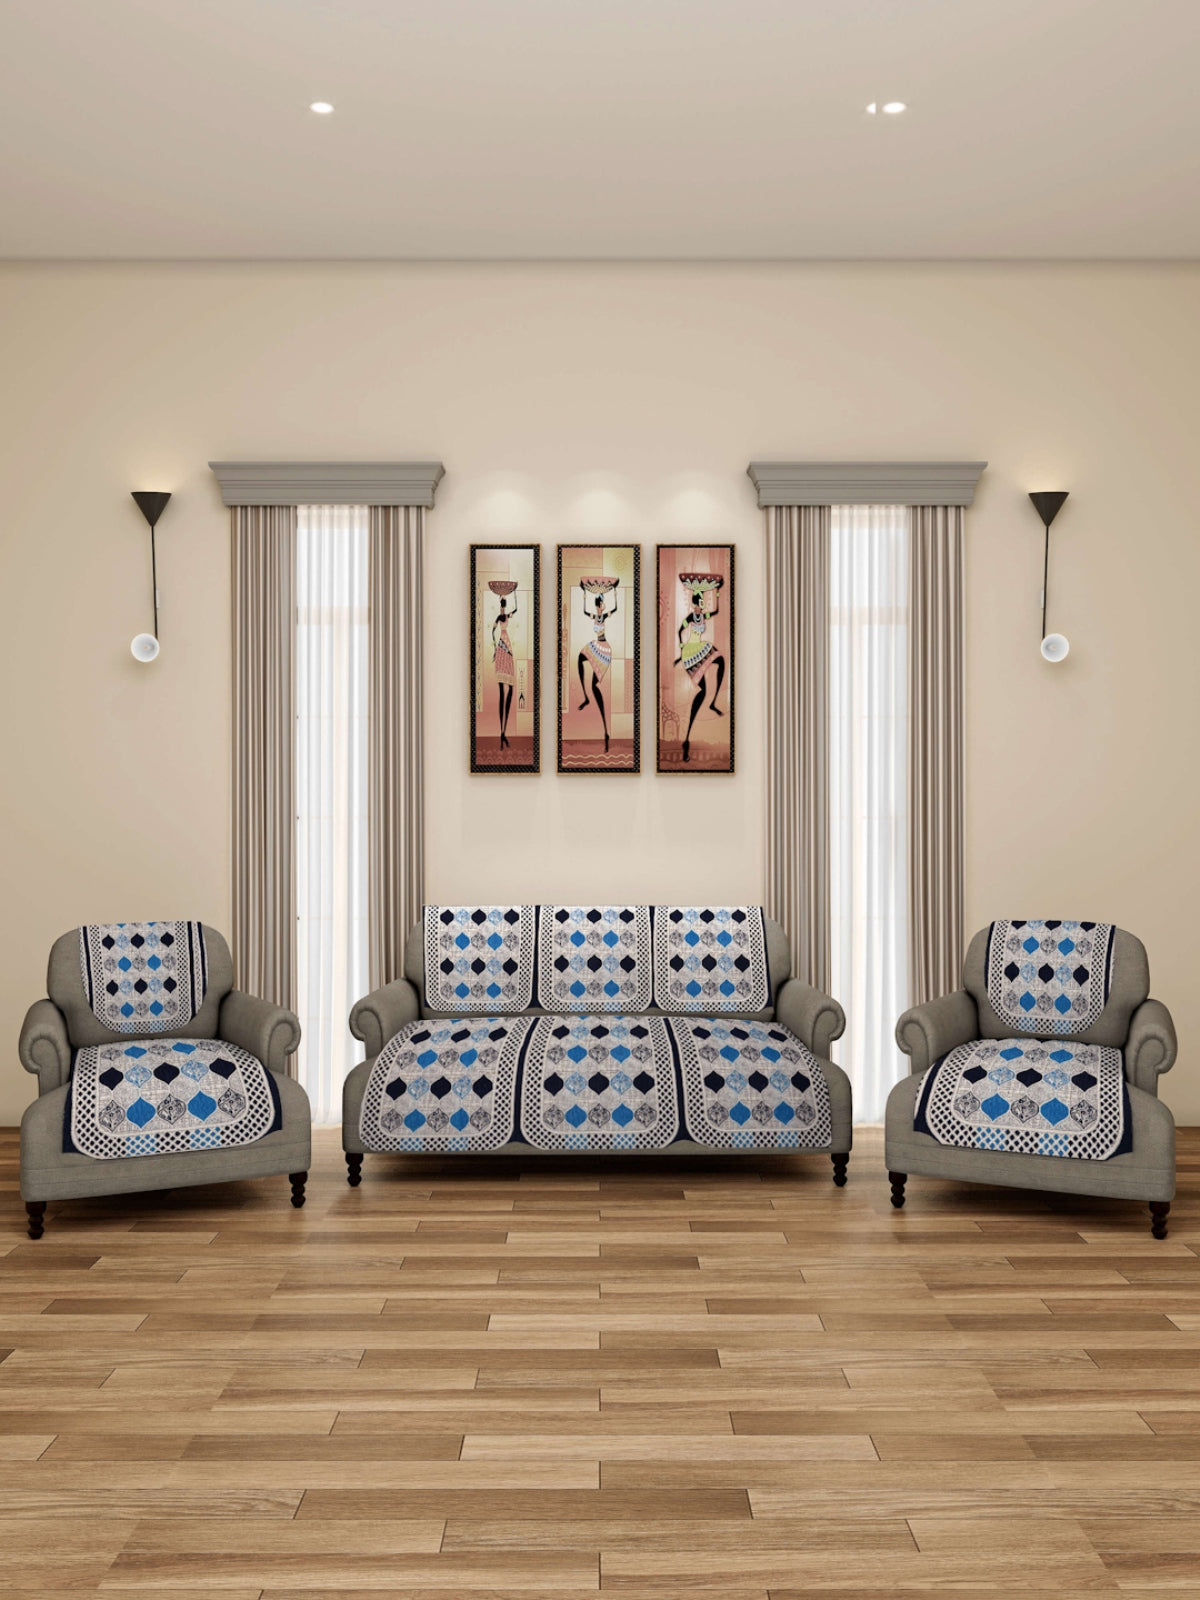 6-Pieces Beige & Blue Classic Design 5-Seater Sofa Covers